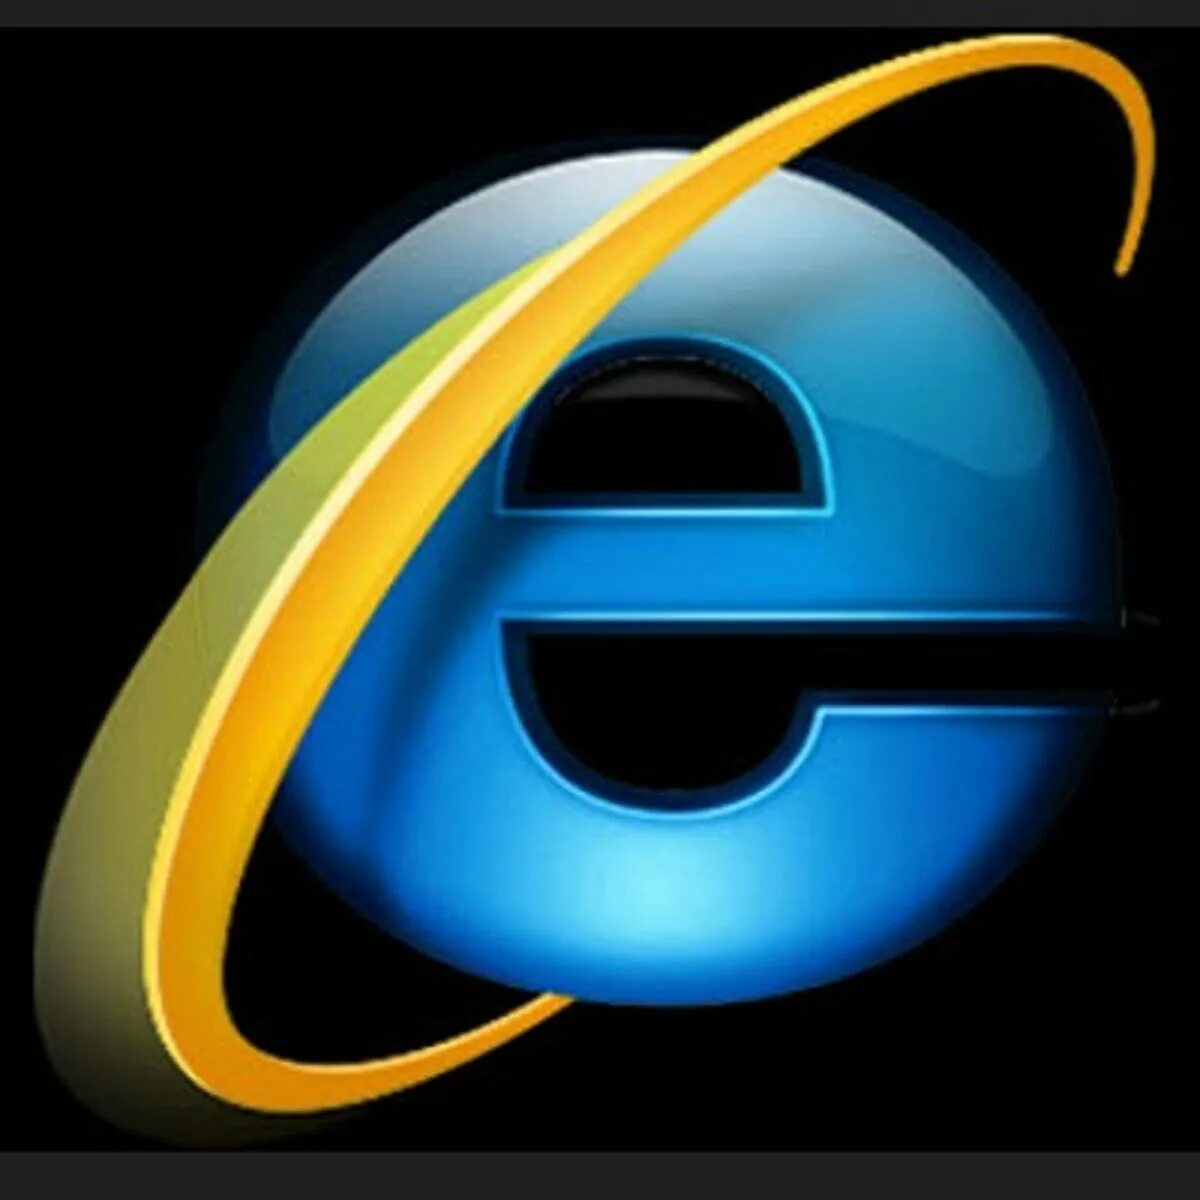 Браузера microsoft internet explorer. Internet Explorer. Интернет Explorer. Логотип интернет эксплорер. Ярлык интернет эксплорер.